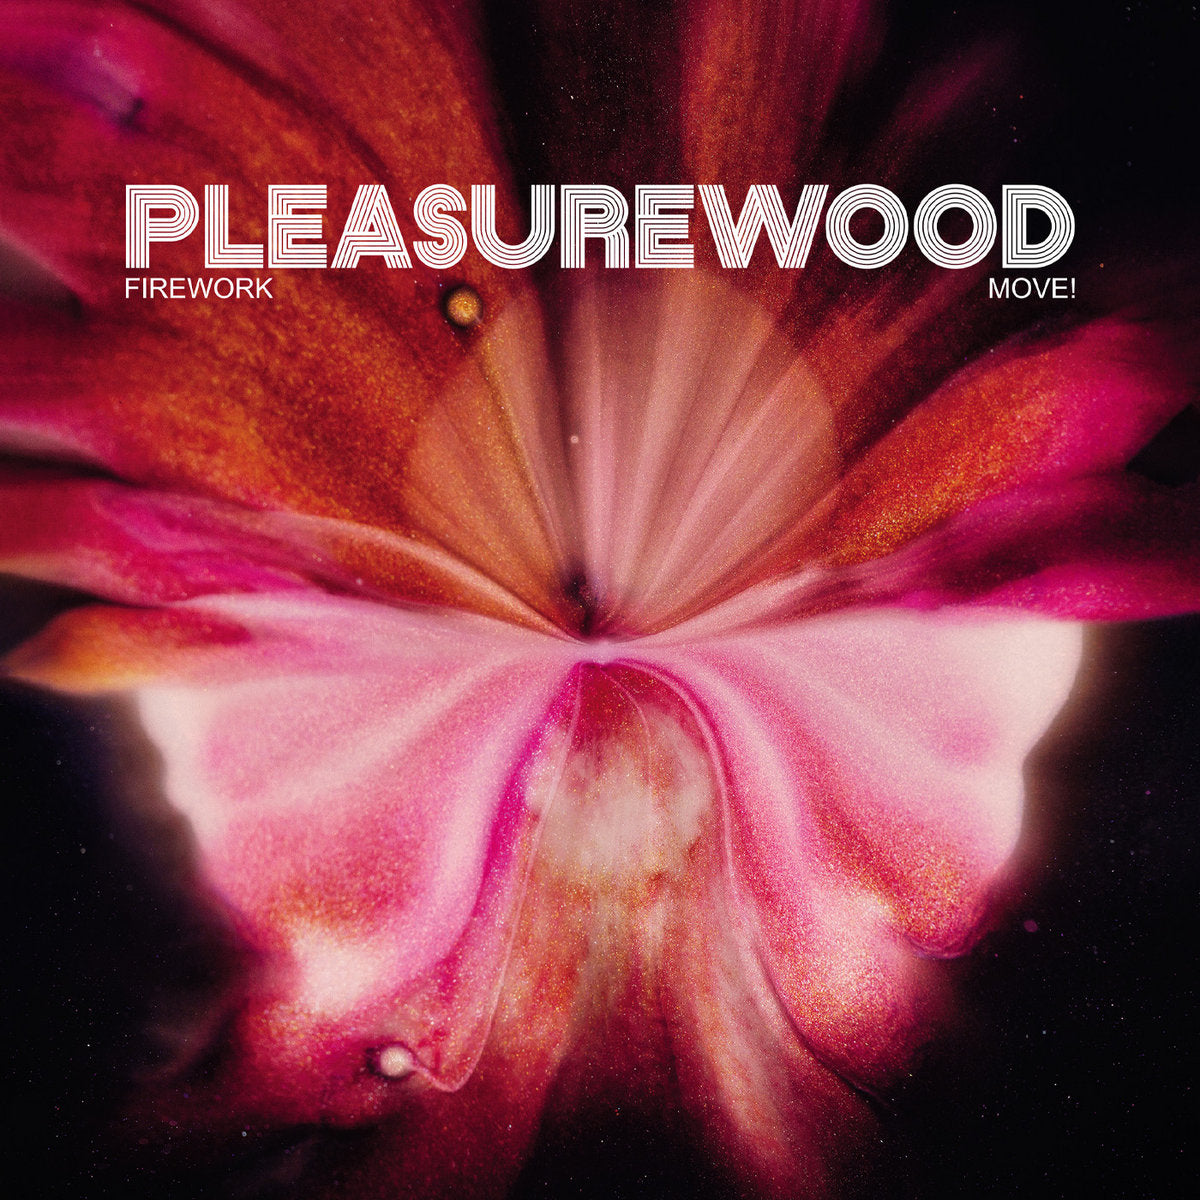 Pleasurewood - Firework b/w Move!